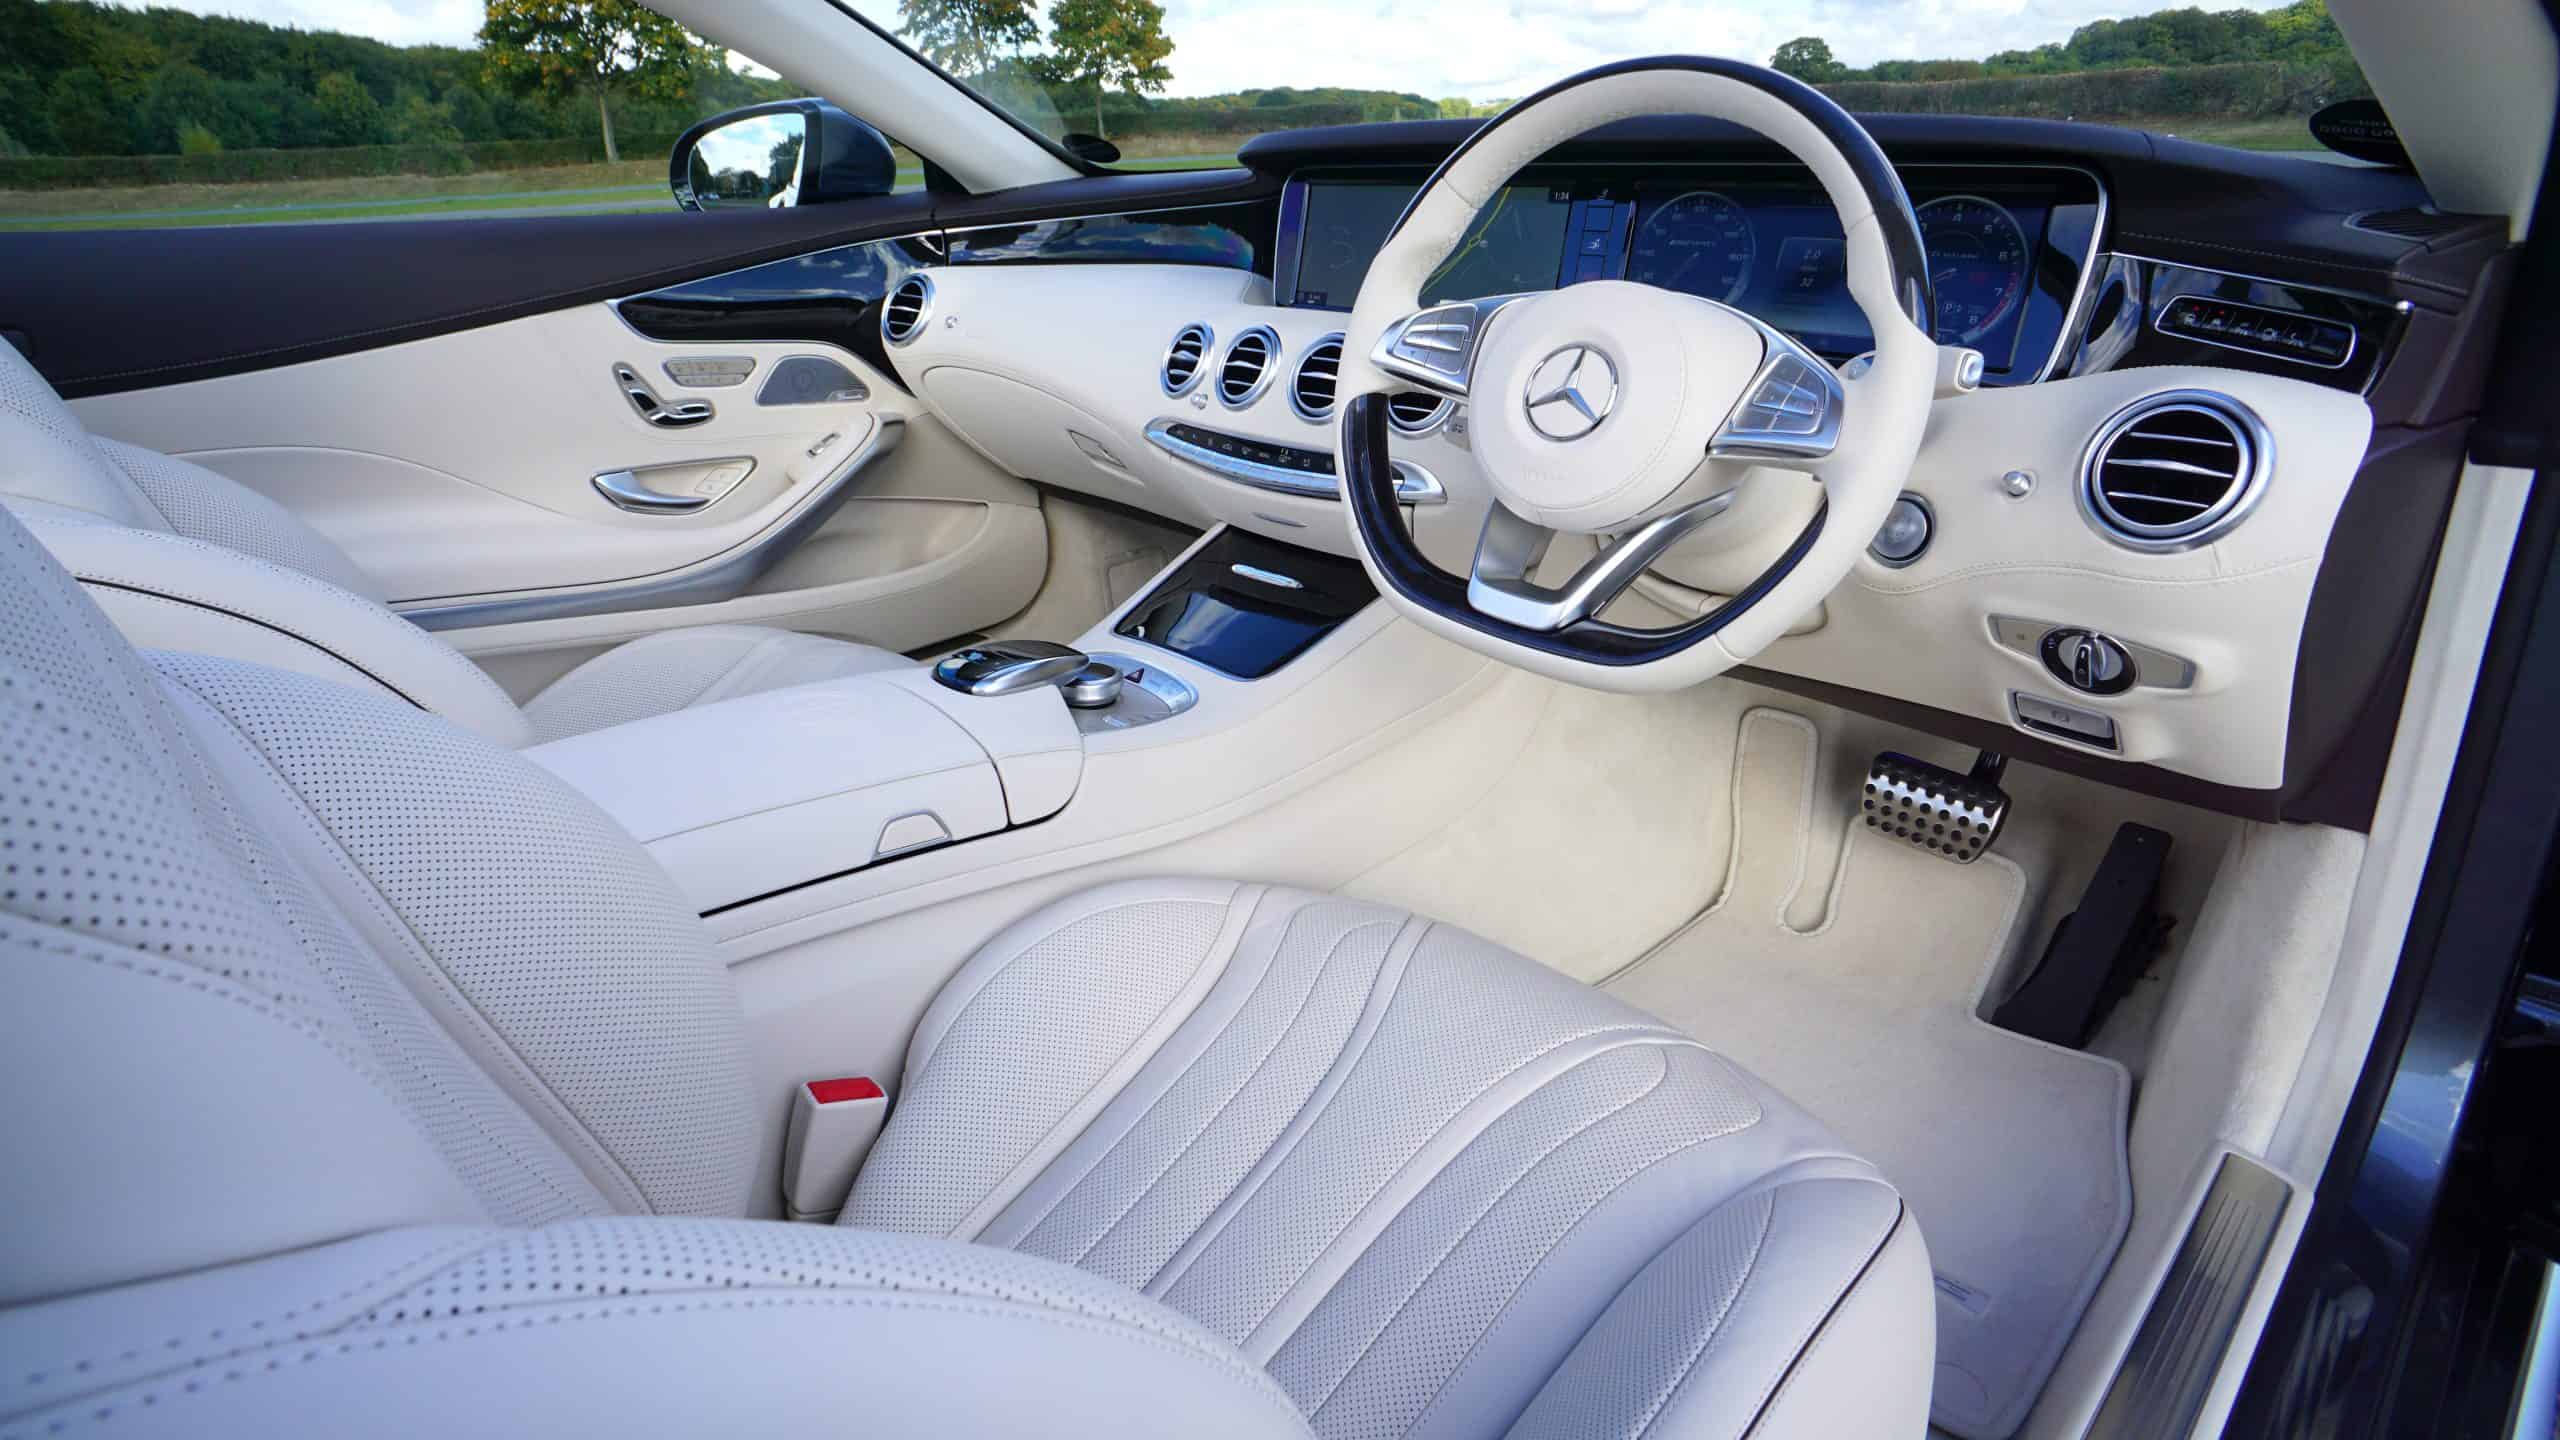 Luxury Interior Of A Limousine Mercedes